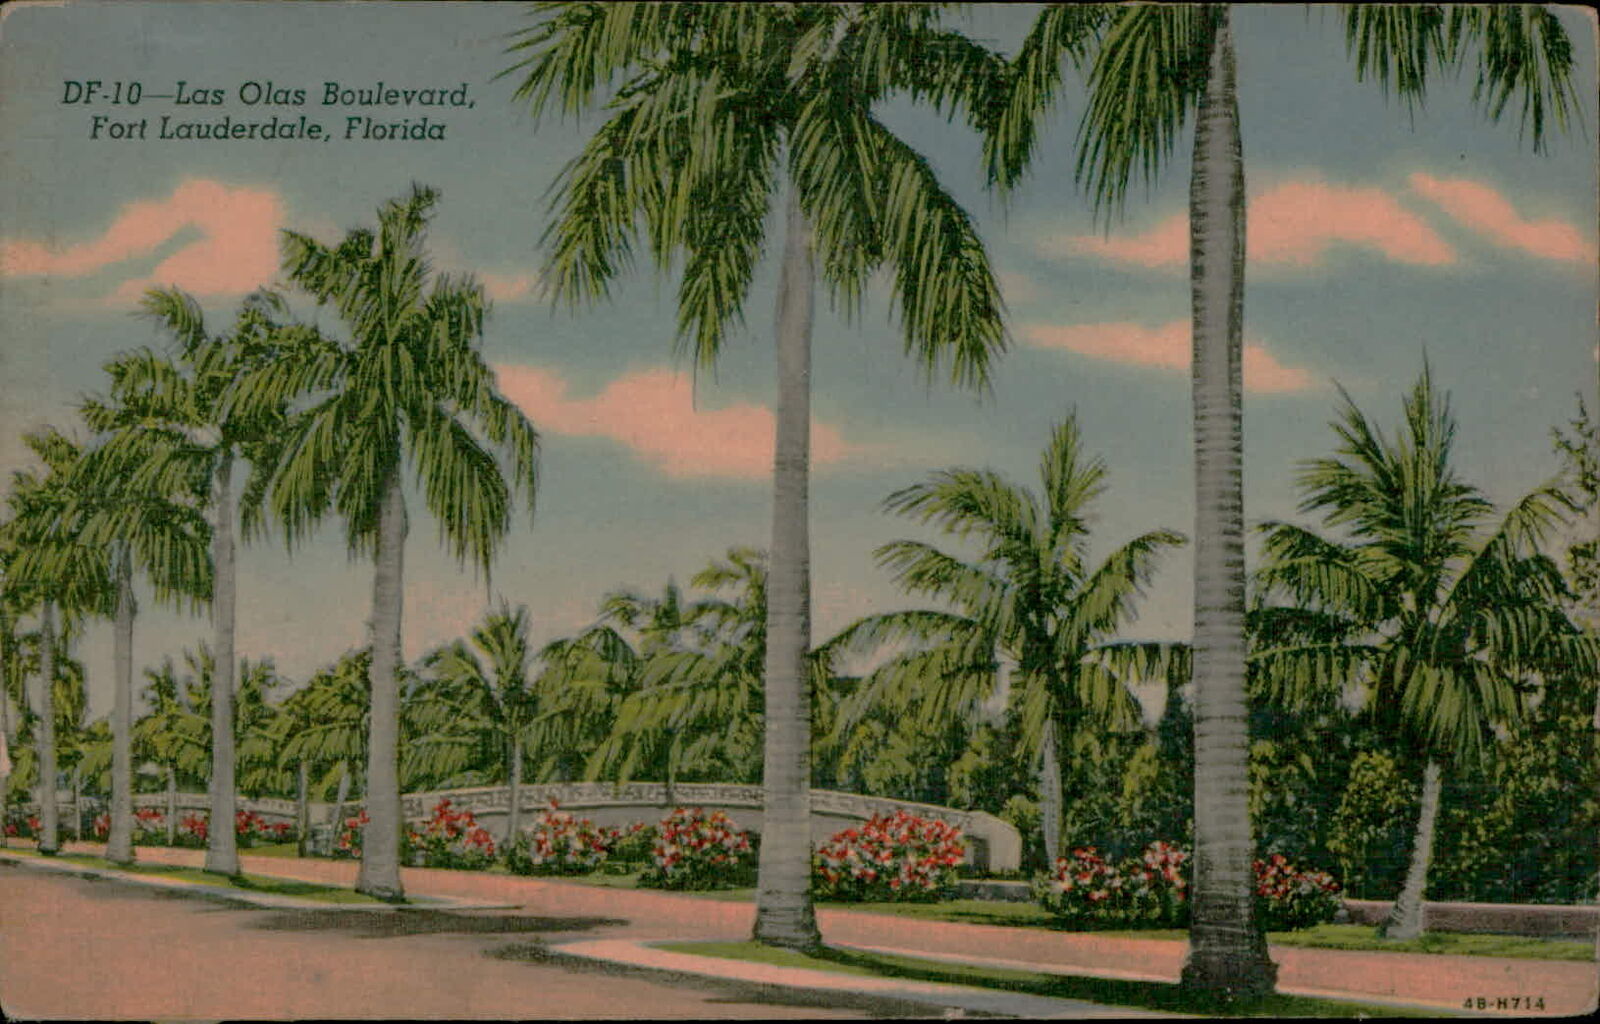 Postcard: DF-10 Las Olas Boulevard, Fort Lauderdale, Florida 4B-H714